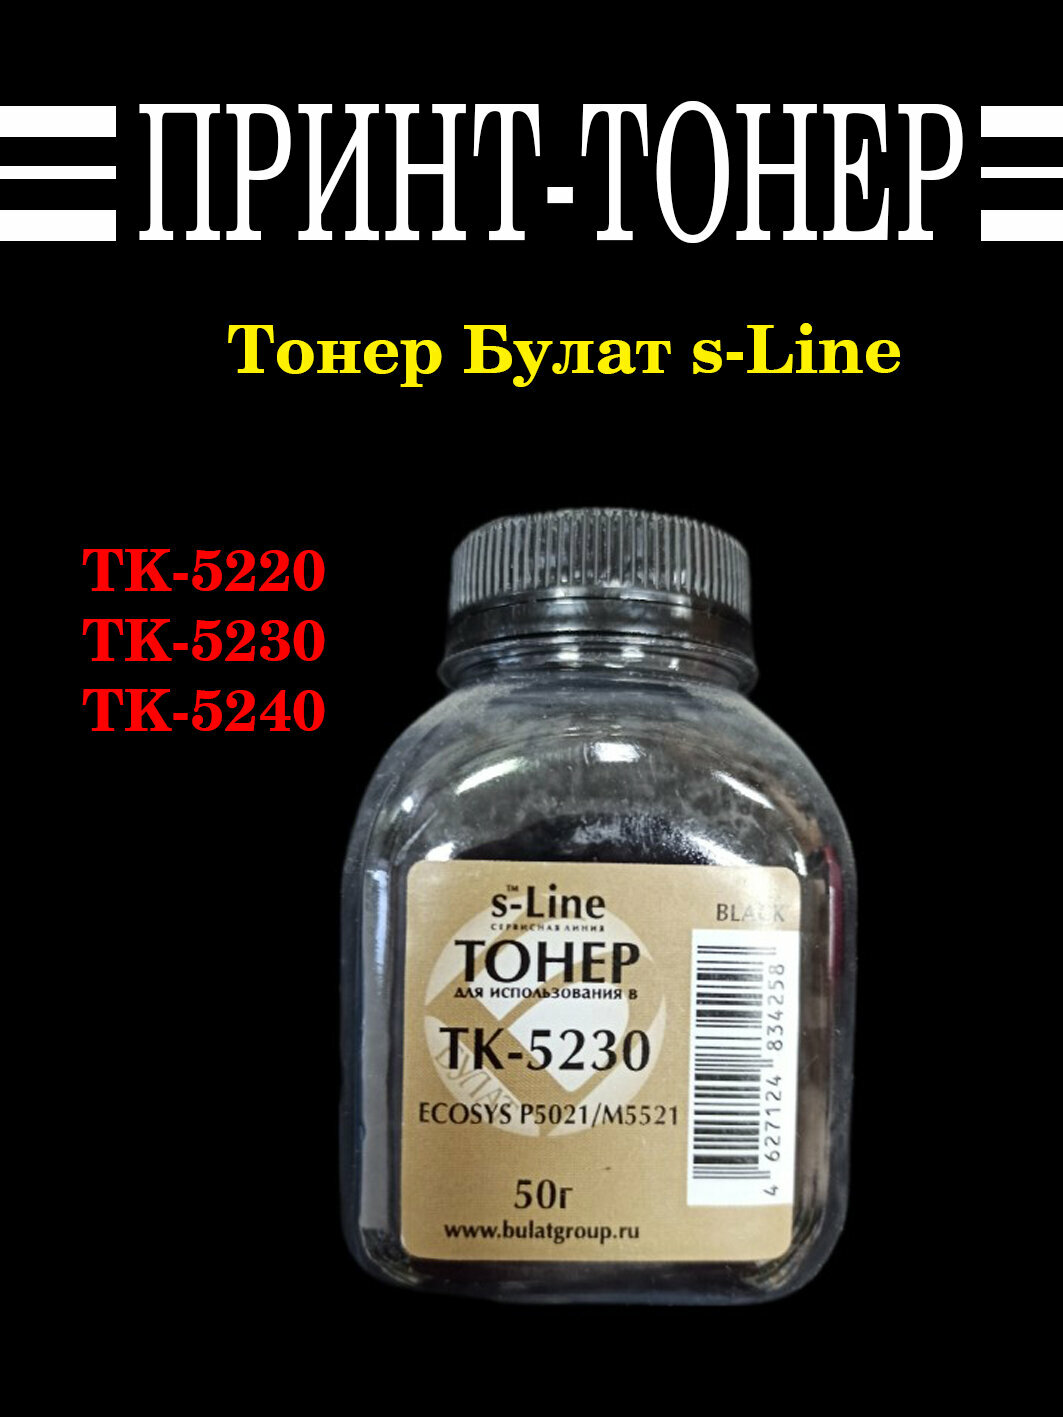 Тонер булат s-Line TK-5230 P5021 (черный) 50 гр